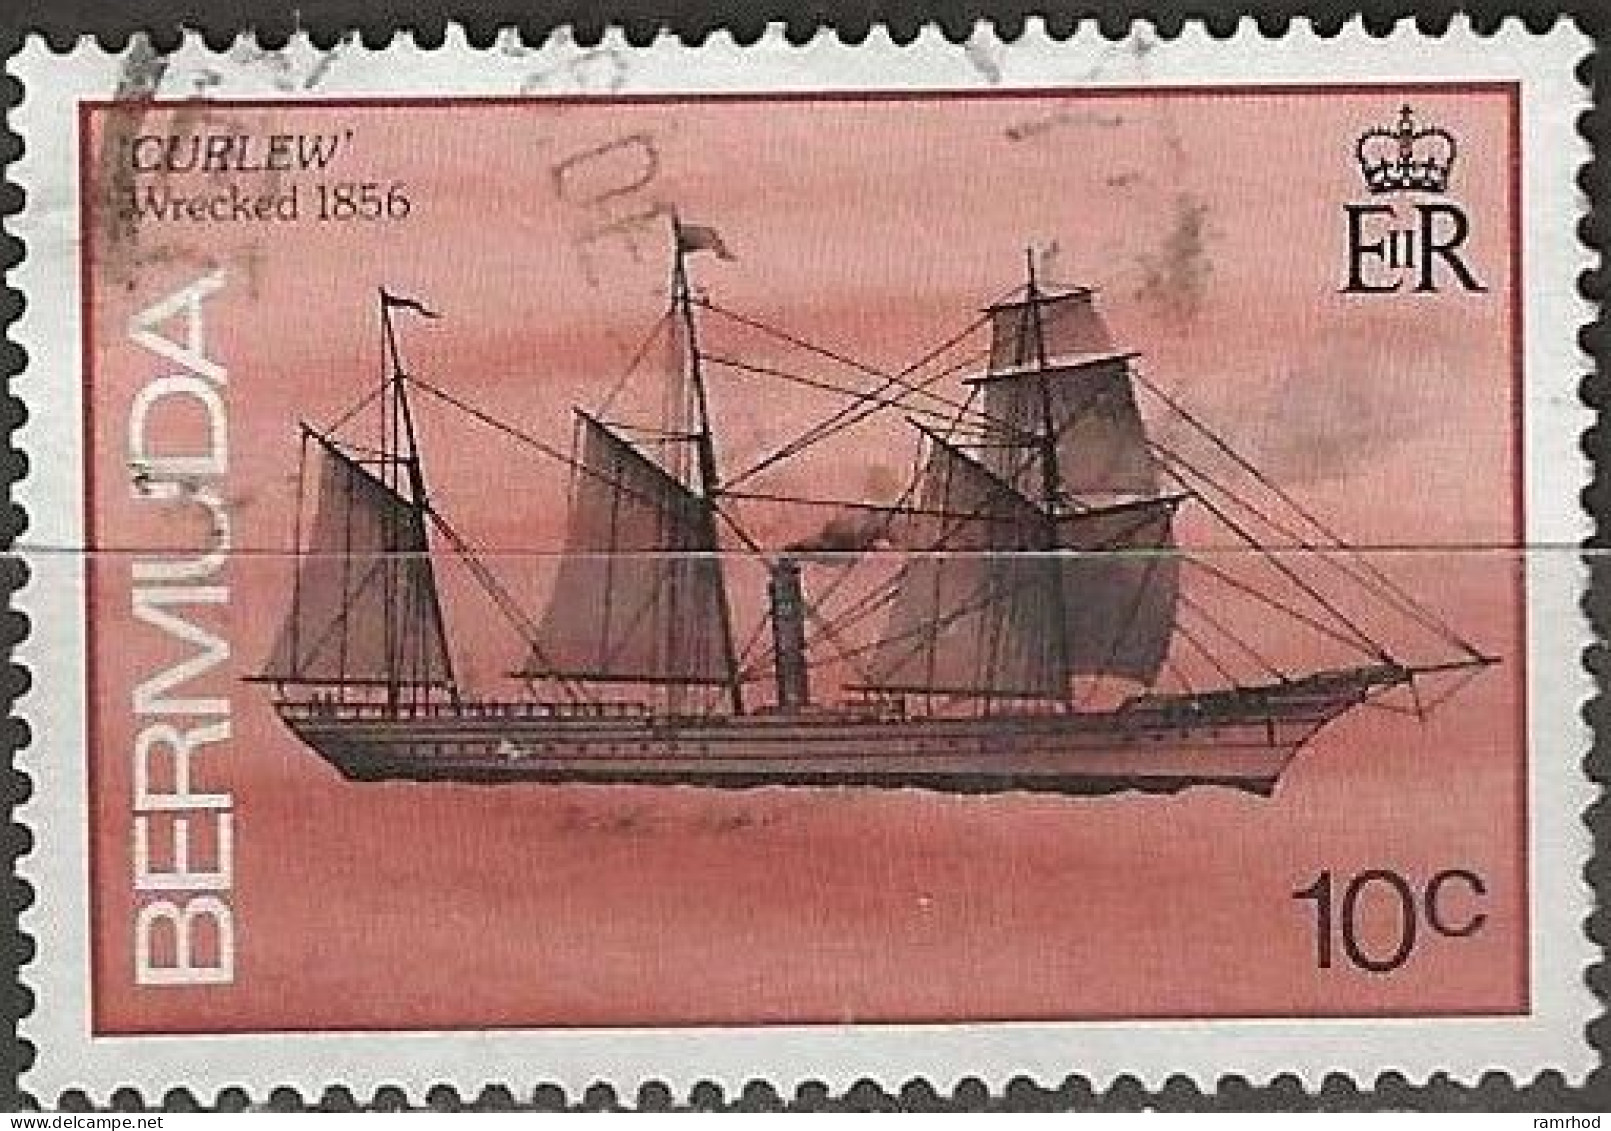 BERMUDA 198 Ships Wrecked On Bermuda - 10c. - Curlew (sail/steamer), 1856 FU - Bermudes